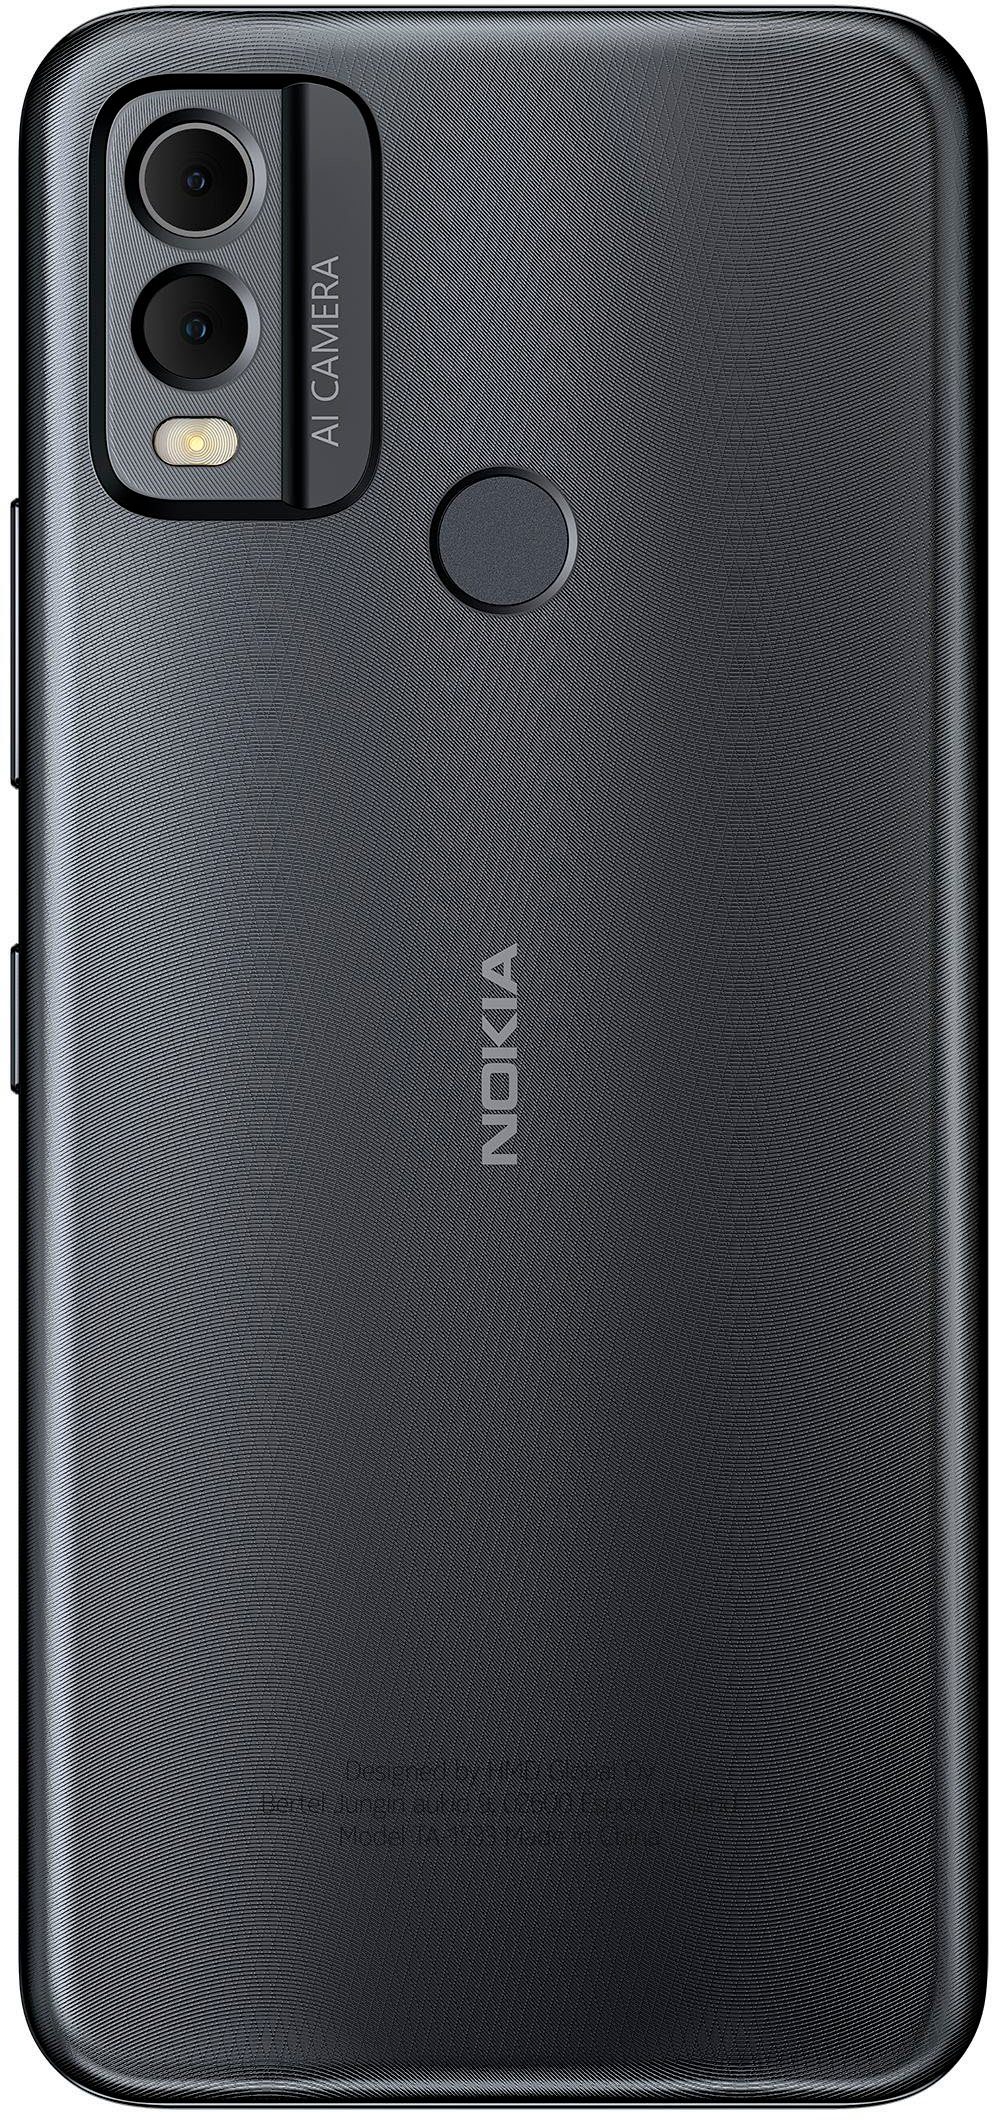 Nokia C22, 2+64GB Smartphone 64 (16,56 Speicherplatz, MP GB 13 cm/6,52 Midnight Zoll, Kamera) Black